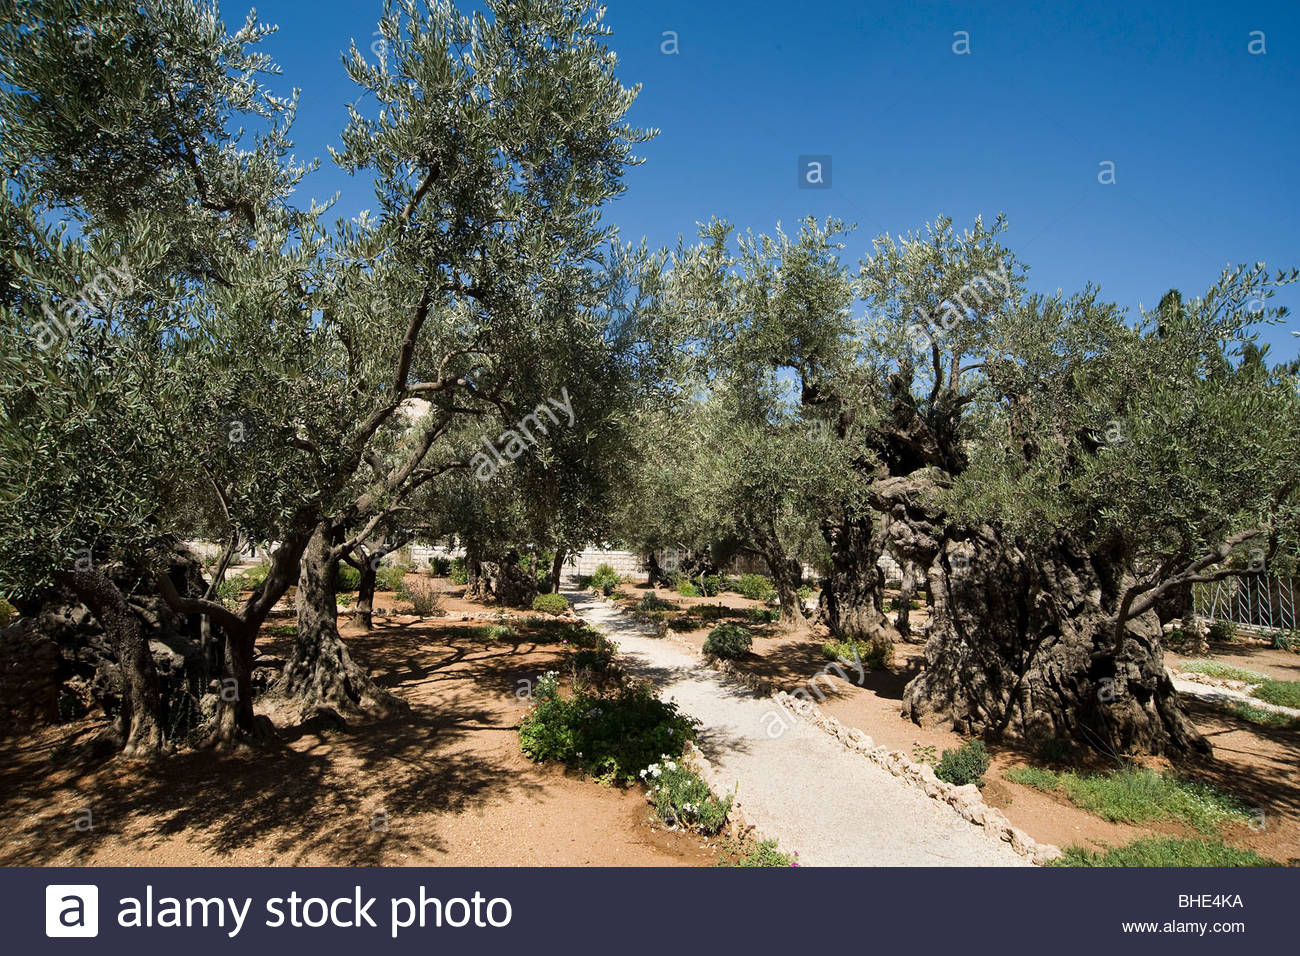 Garden Of Gethsemane Stock Photos Garden Of Gethsemane Stock